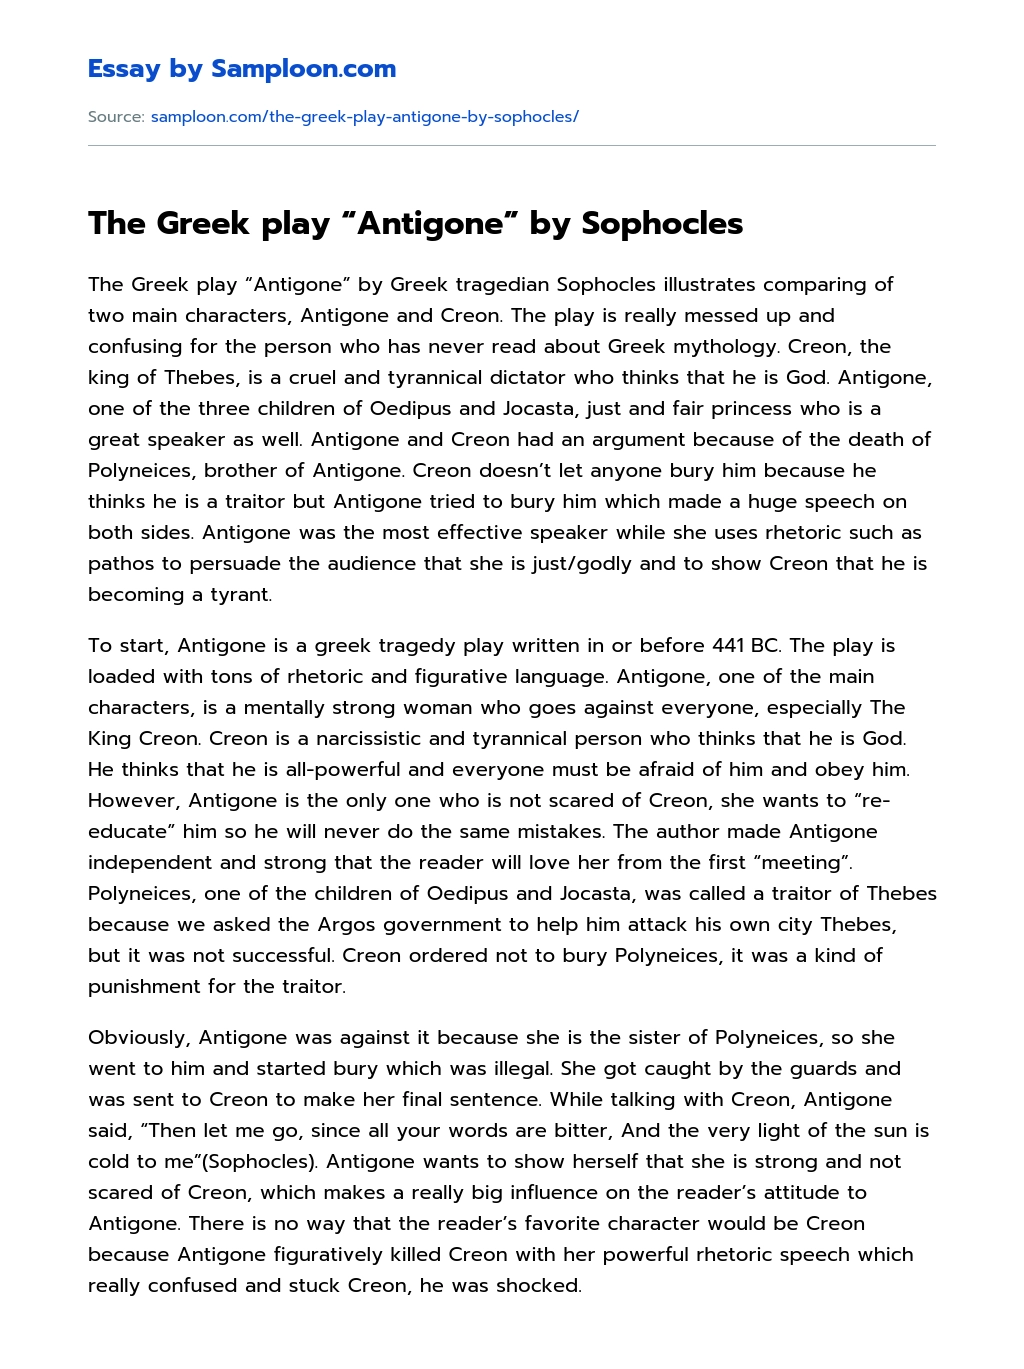 The Greek play “Antigone” by Sophocles Summary essay